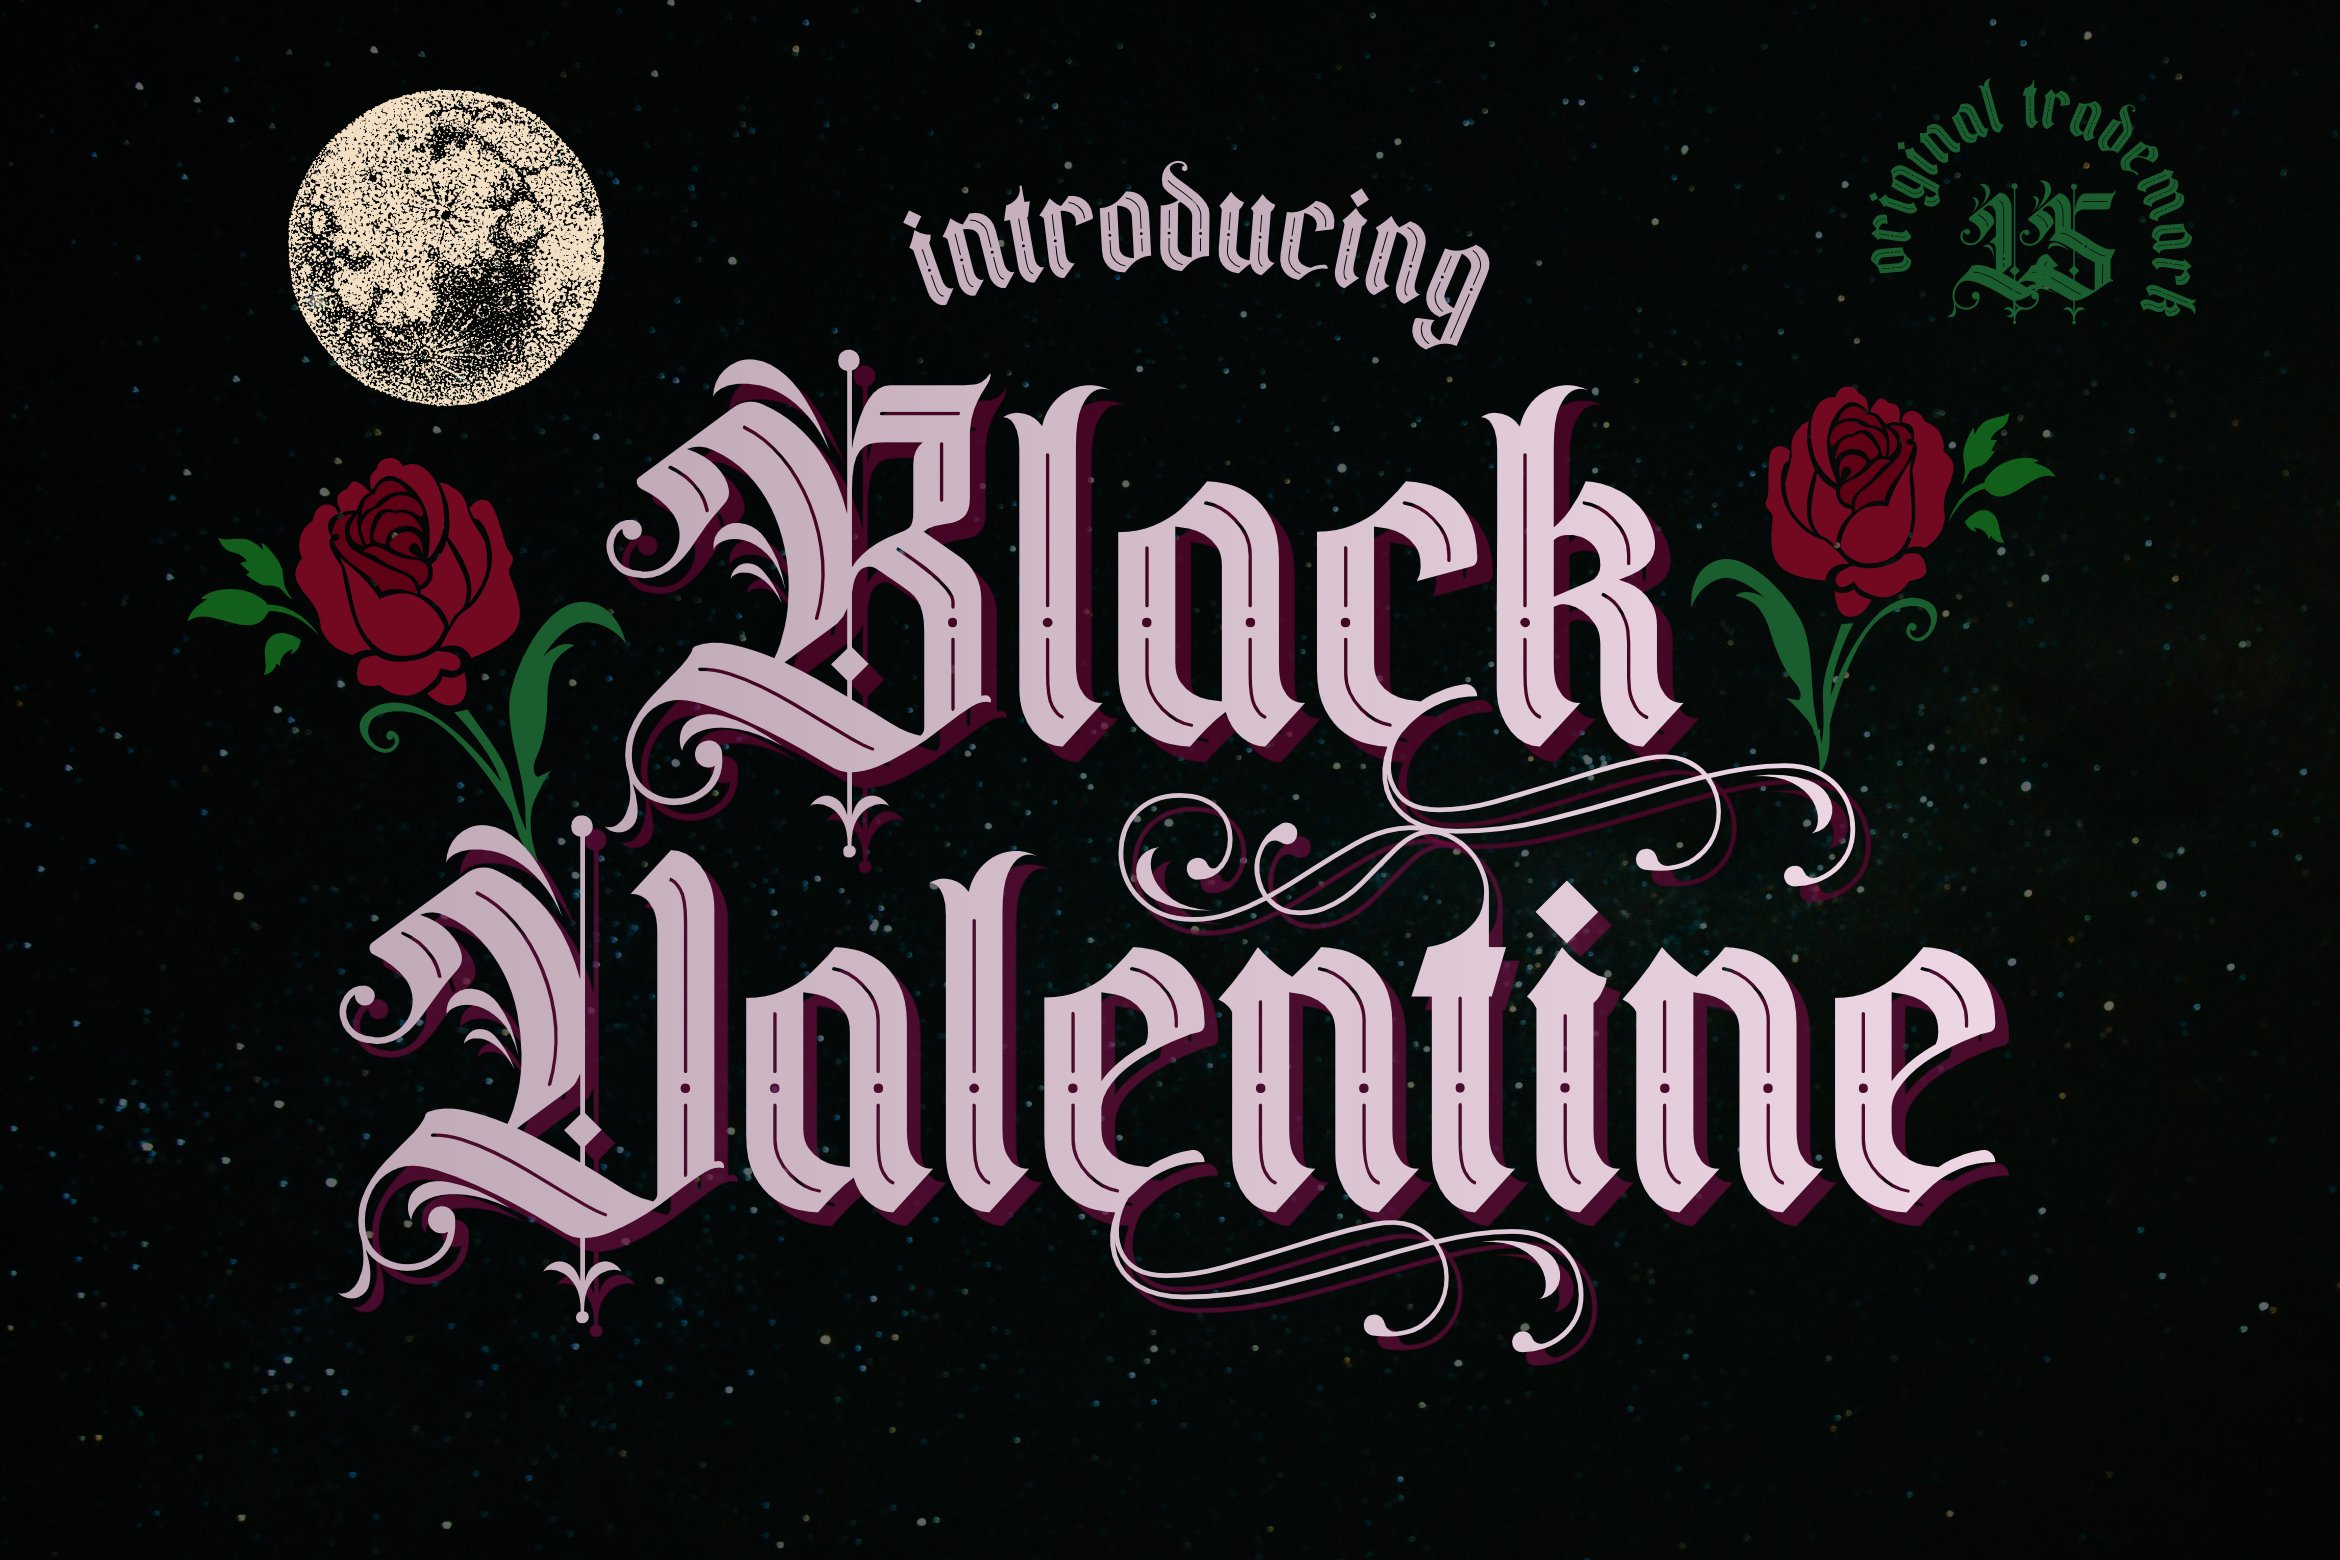 Black valentine cover image.